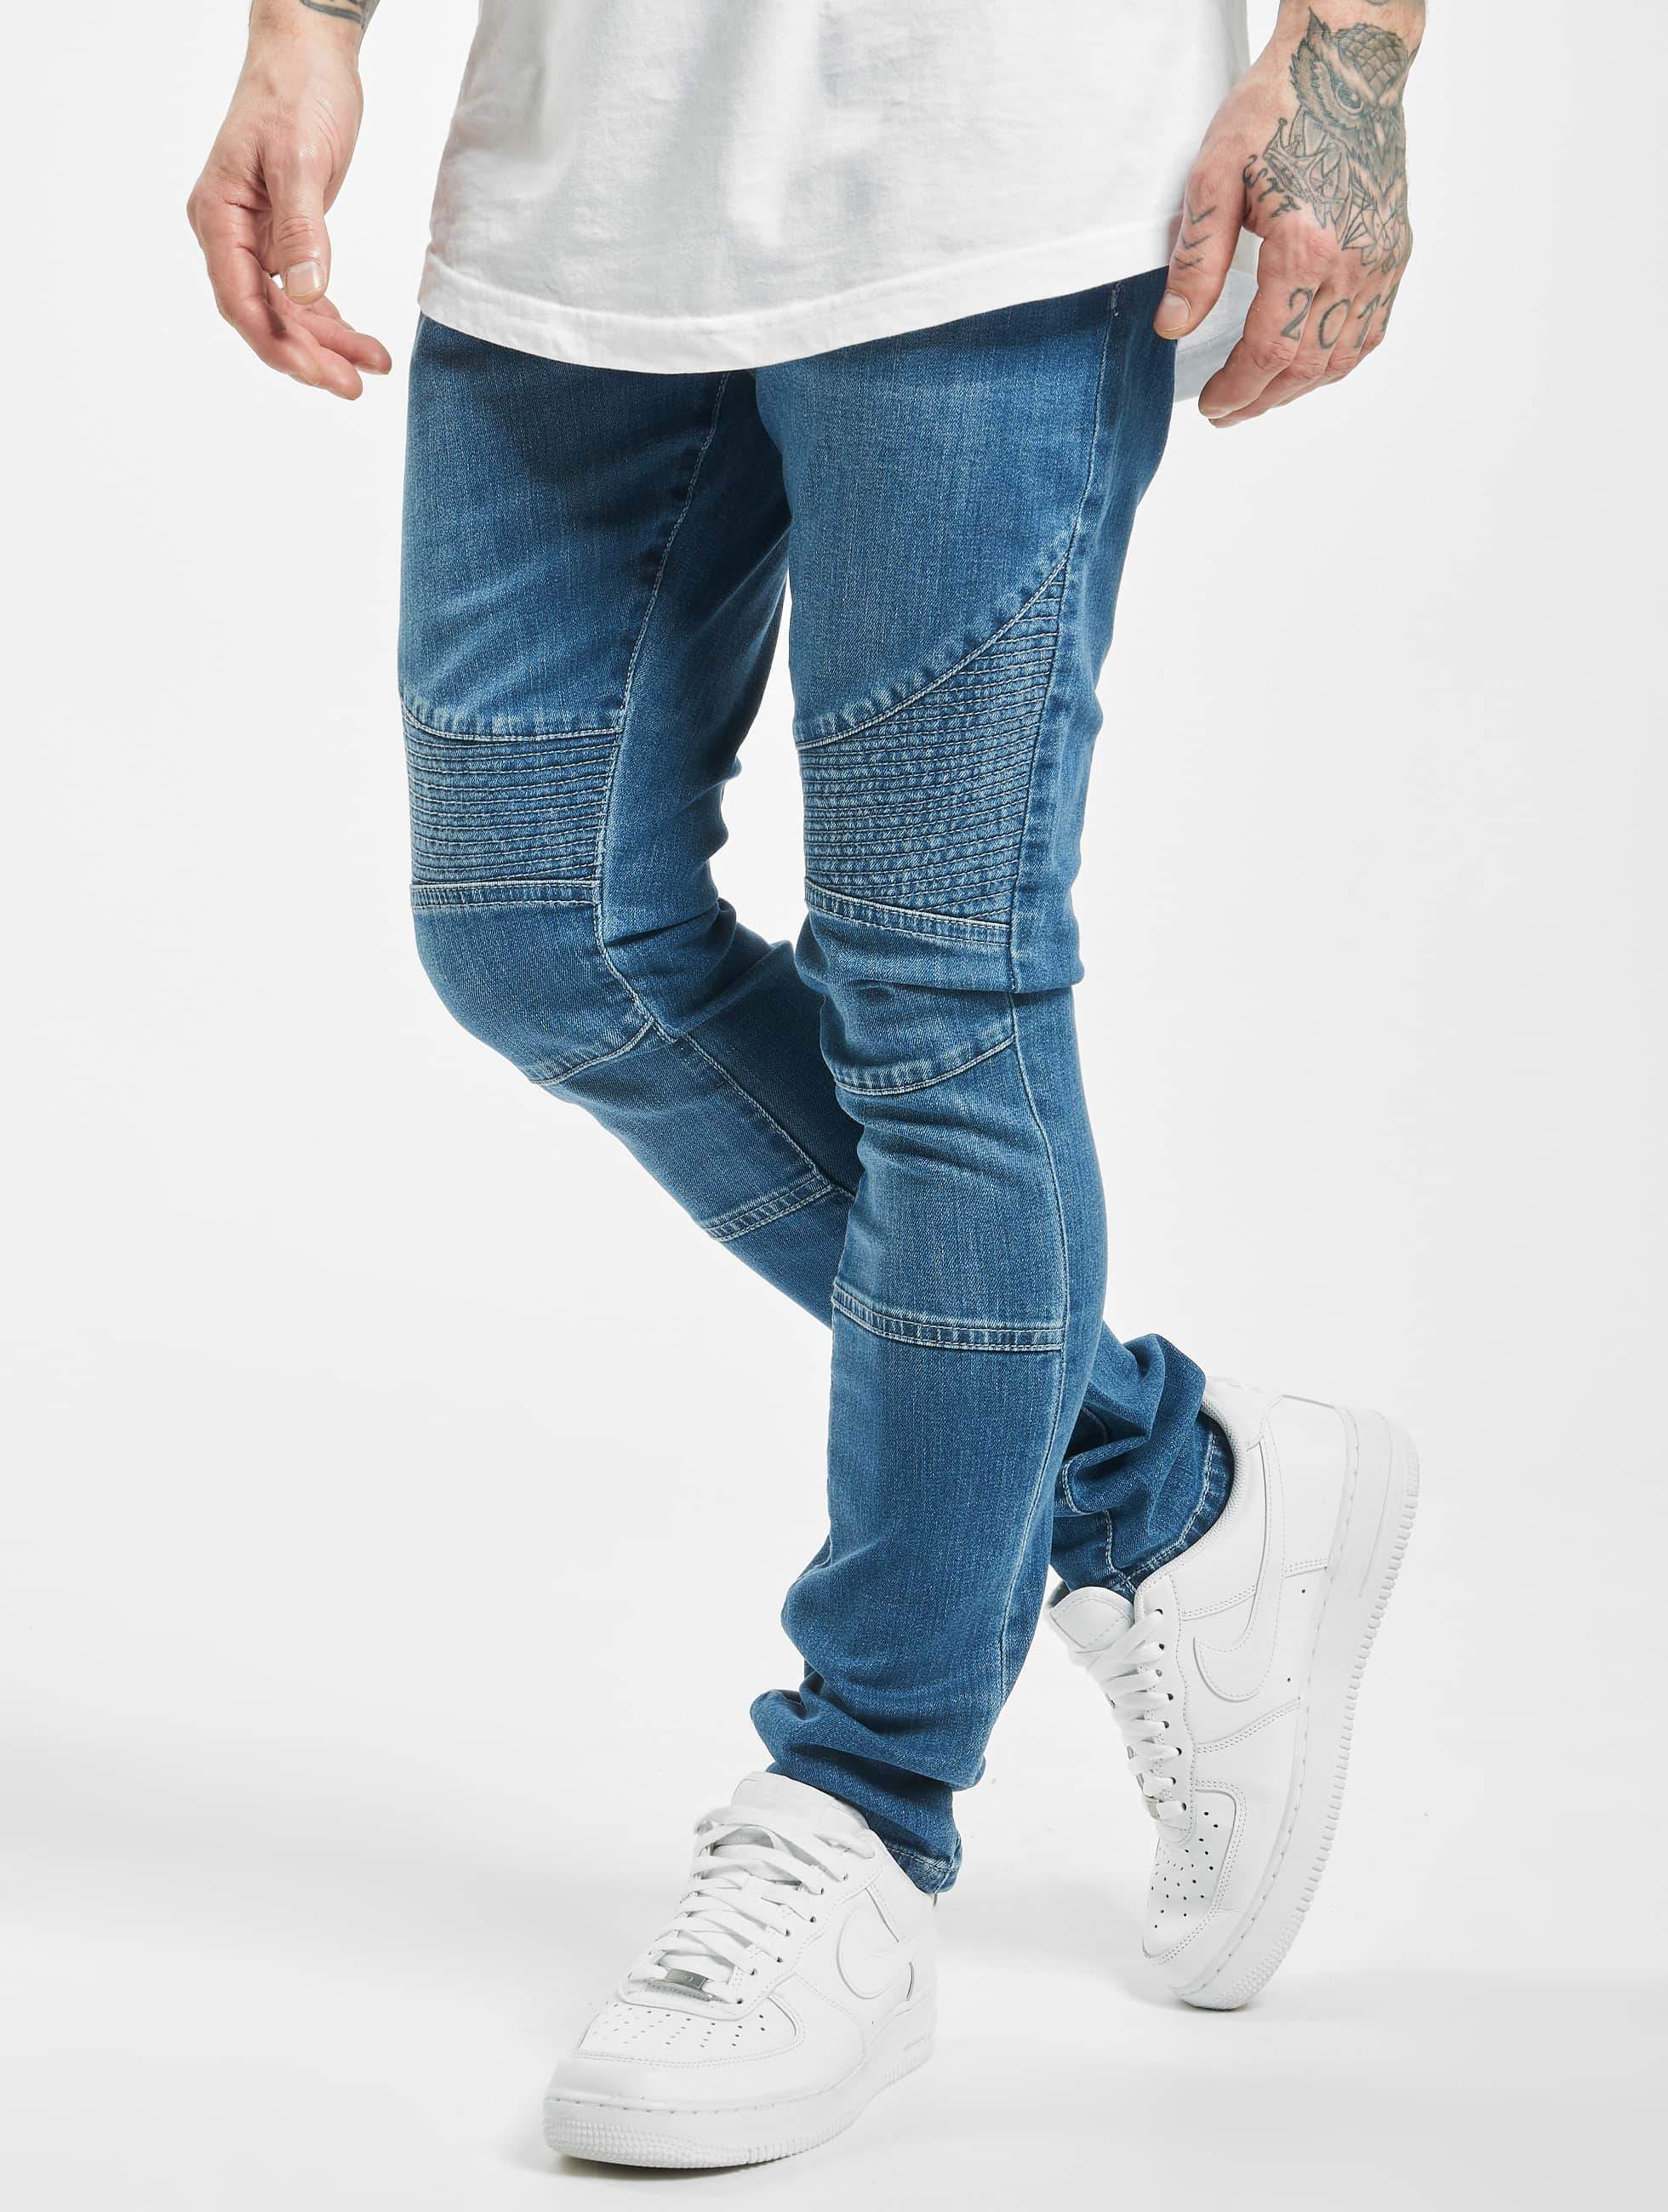 verdiepen Vakman Geroosterd Urban Classics Jeans / Skinny jeans Slim Fit Biker in blauw 294210